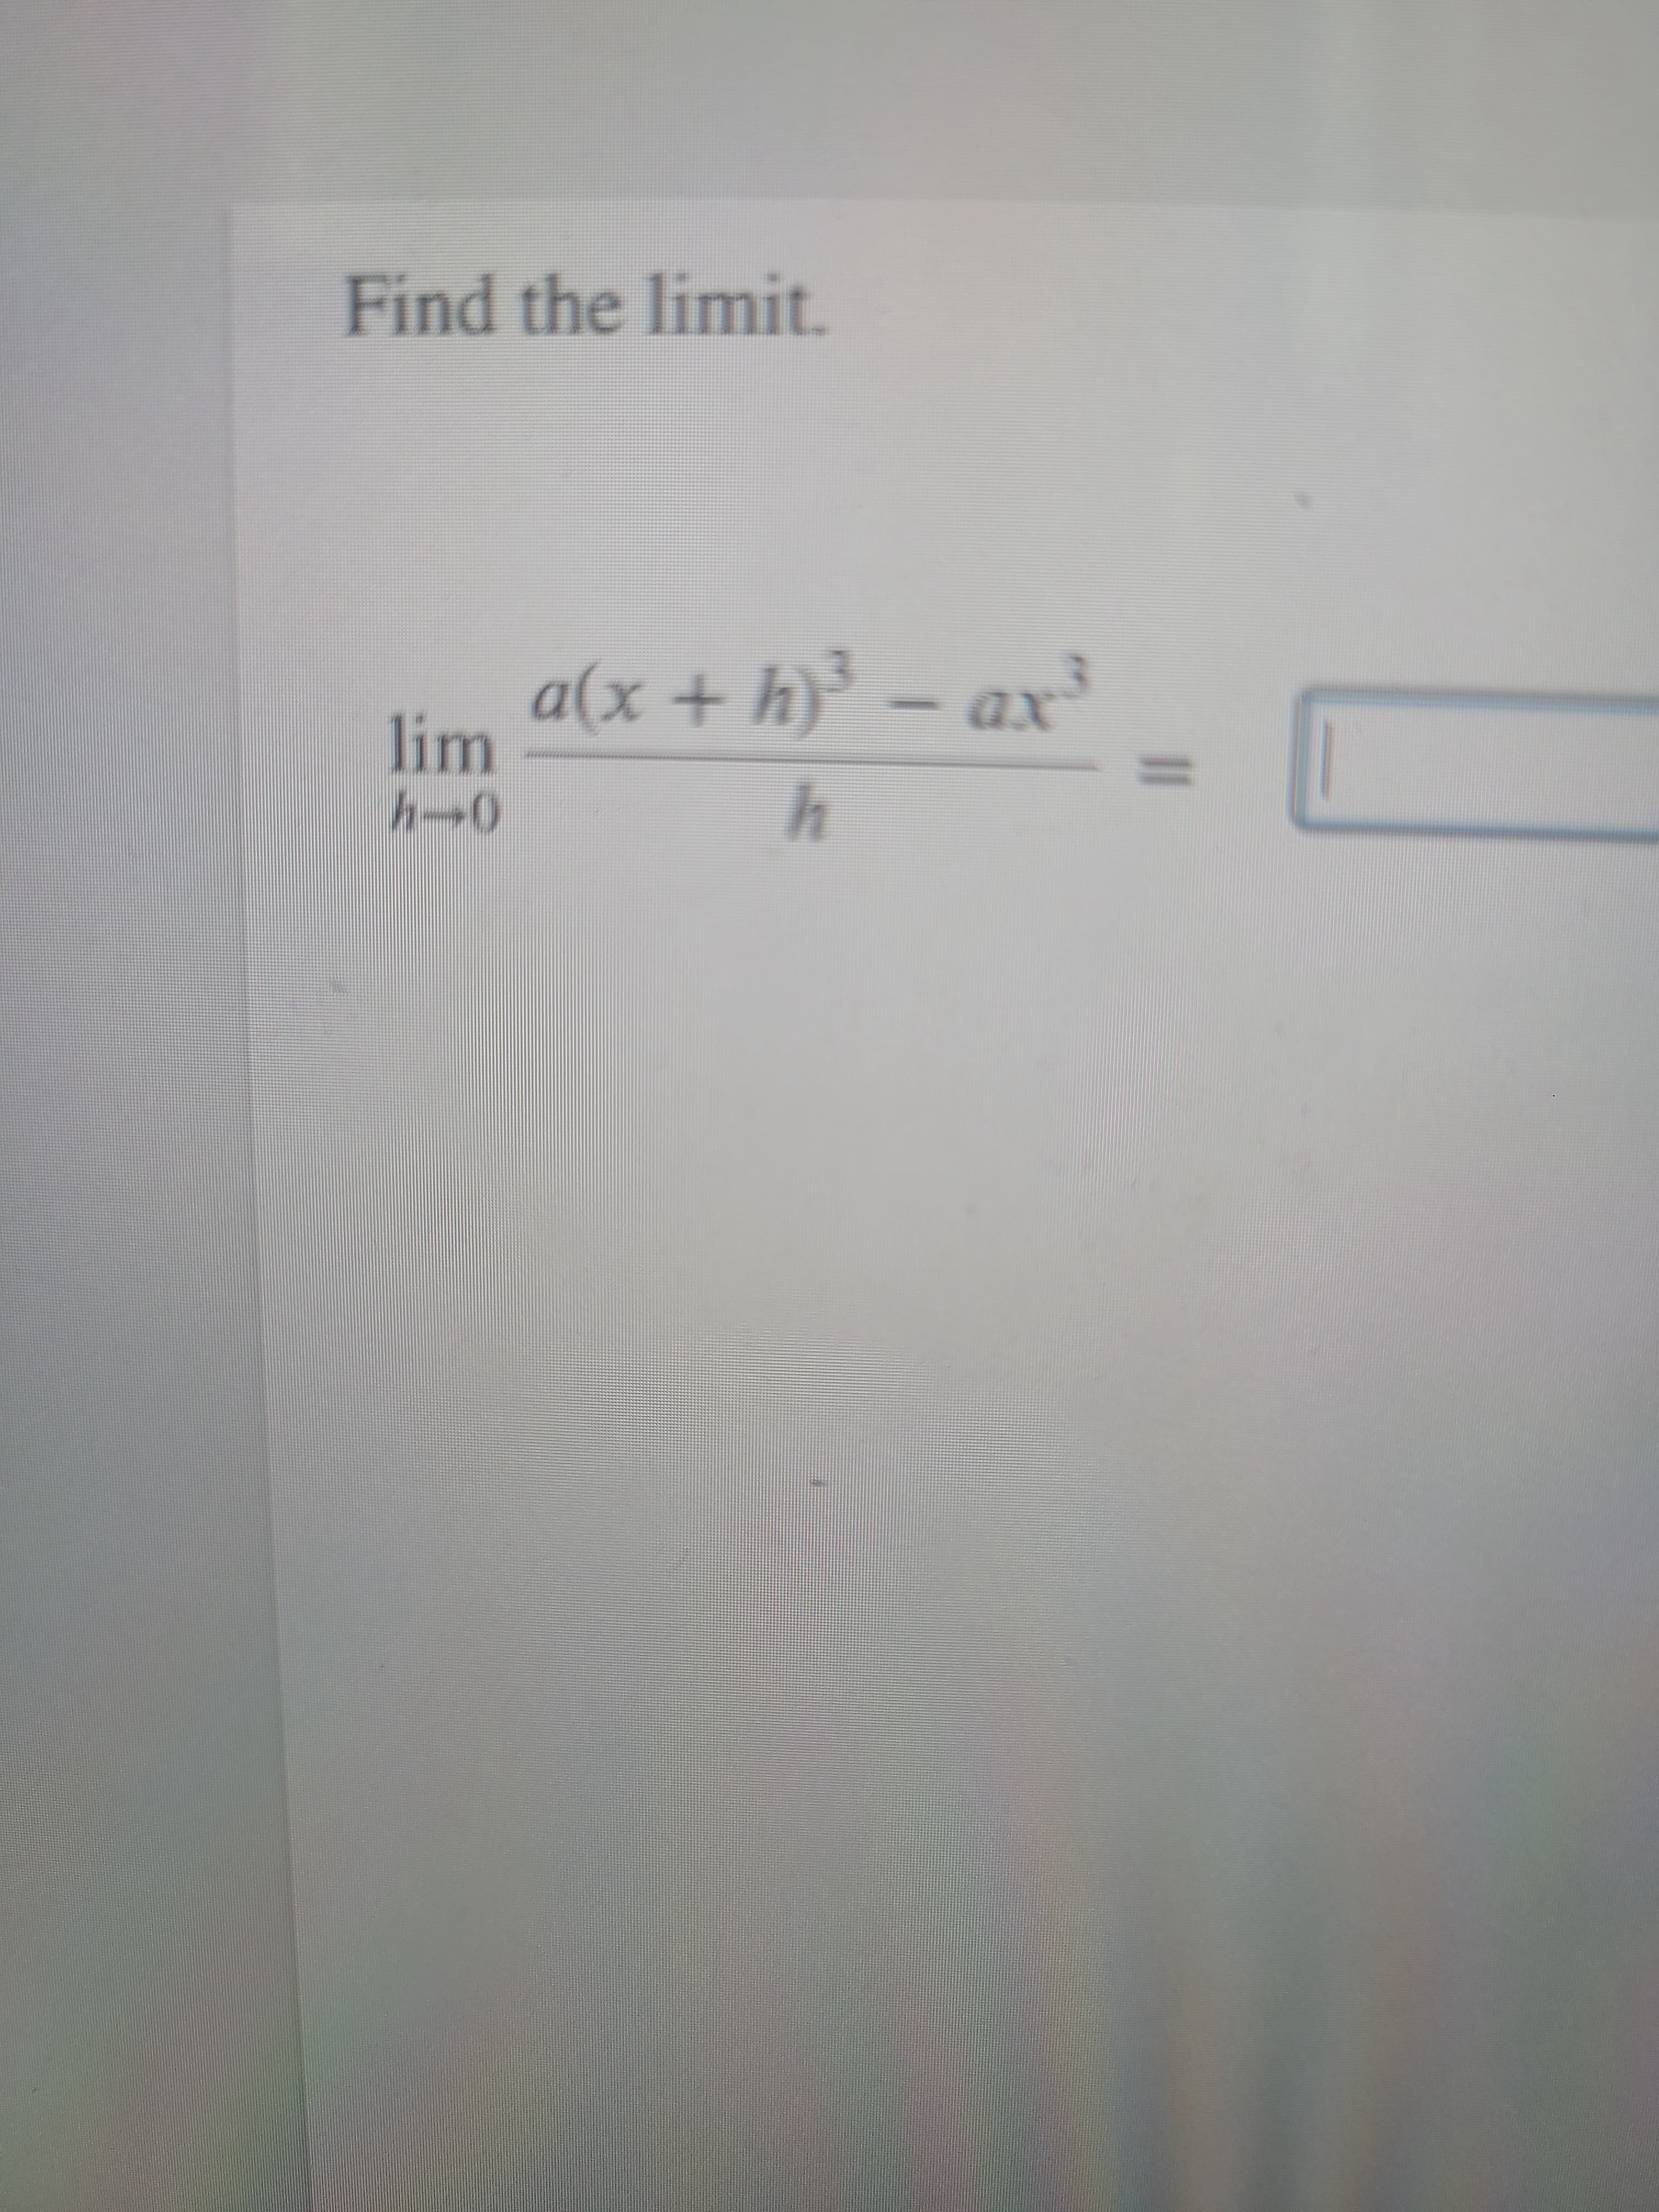 Find the limit.
a(x + h)³ – ax³
lim
h
